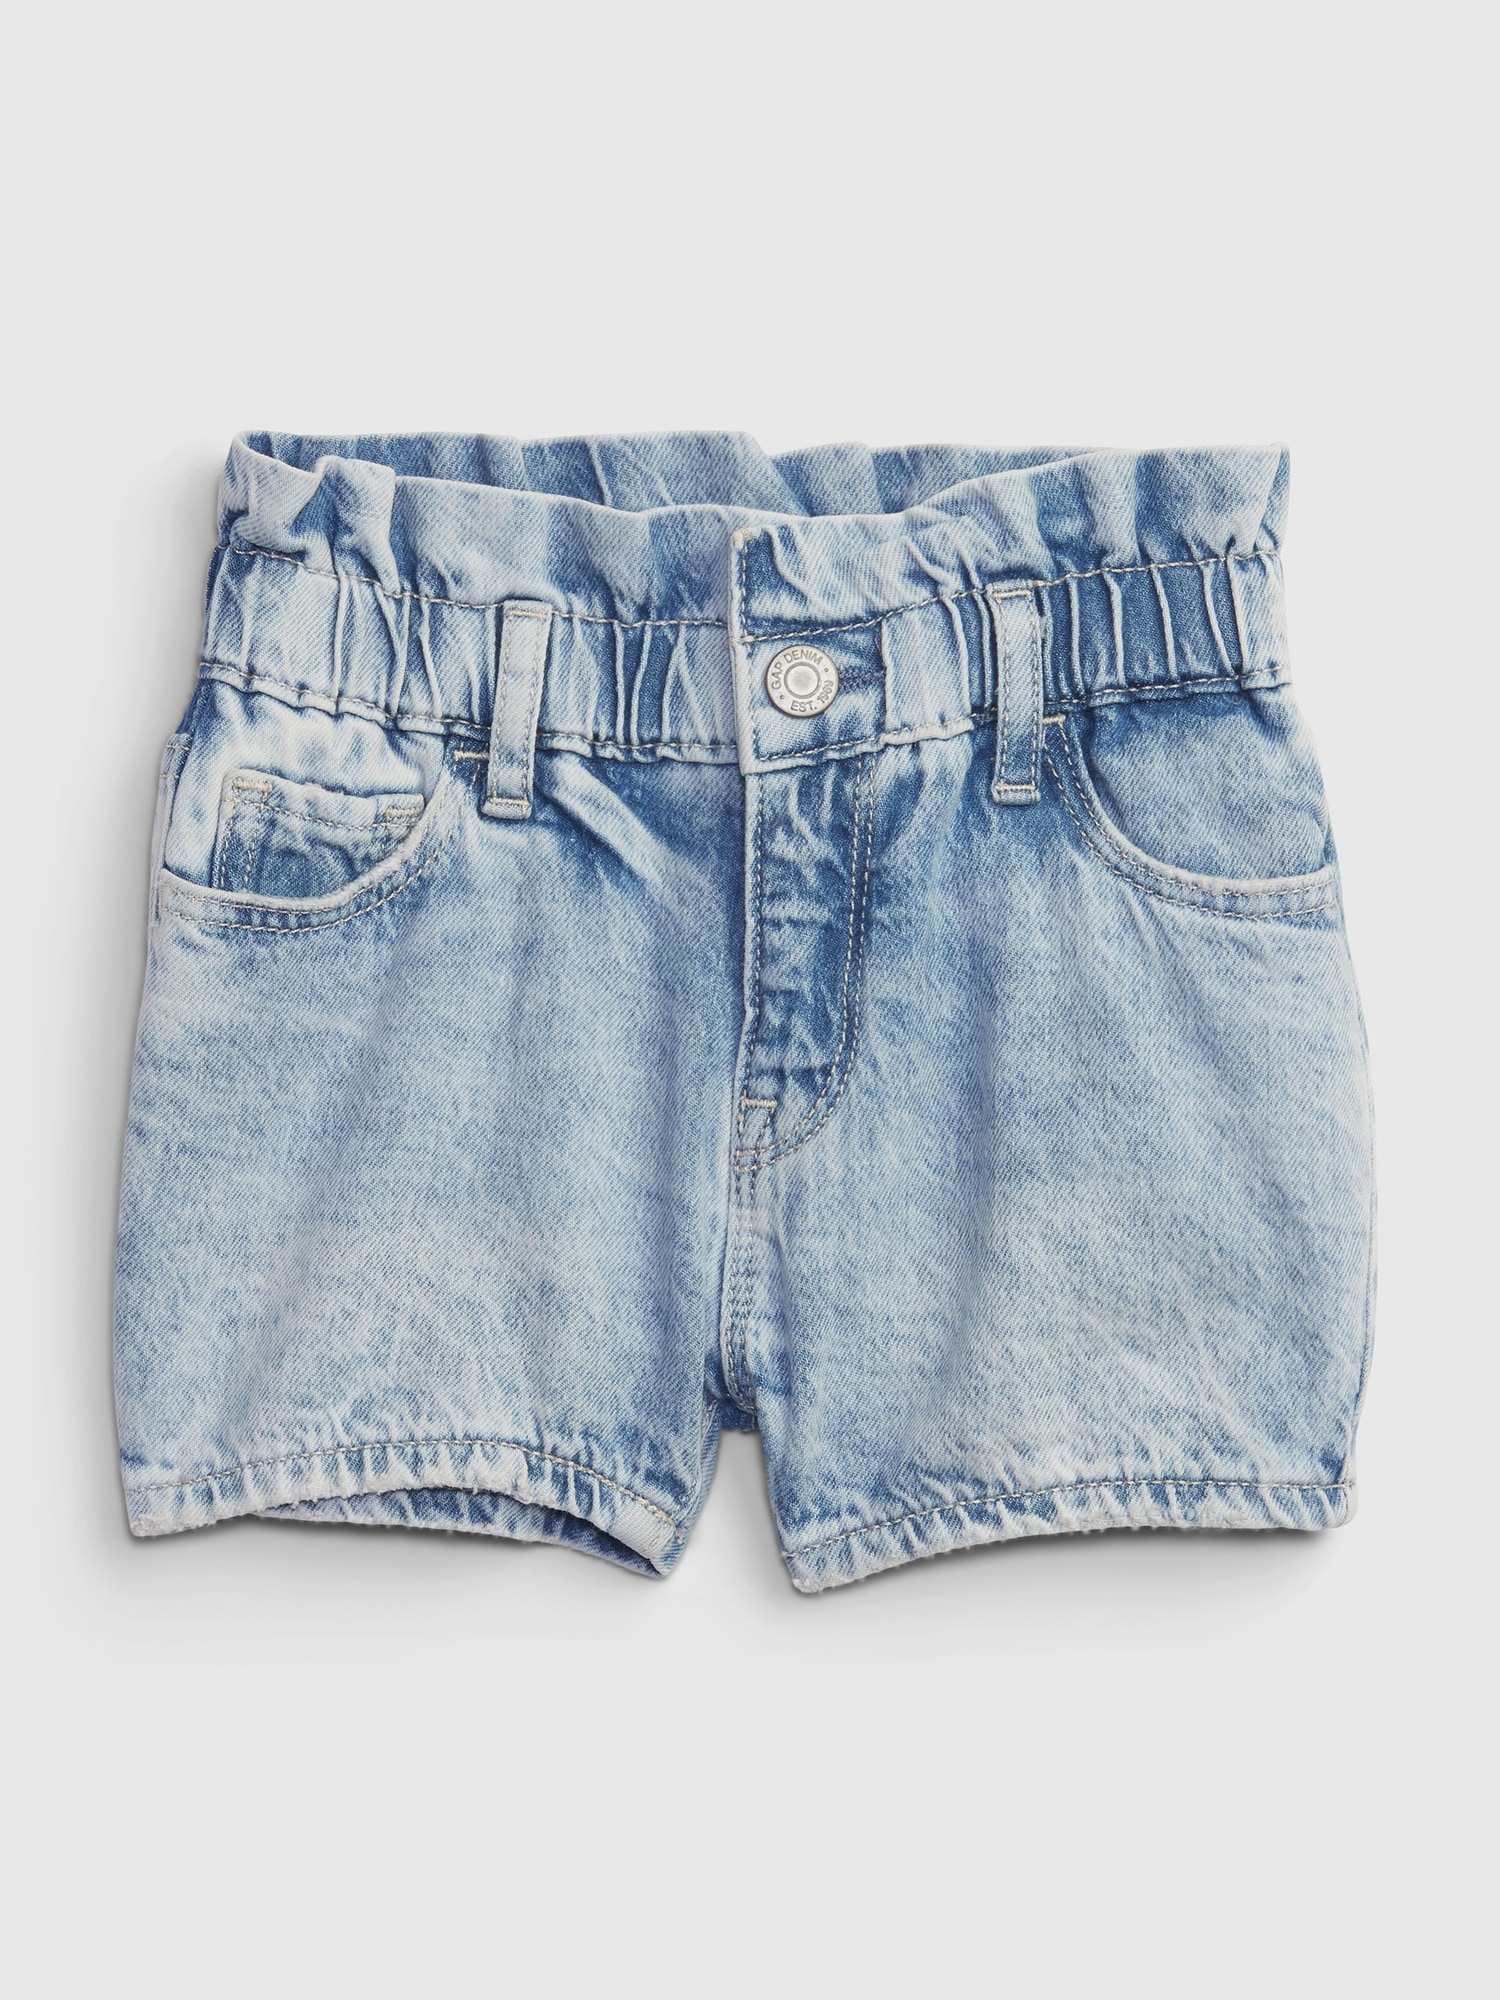 Toddler Just Like Mom Denim Shorts with Washwell | Gap